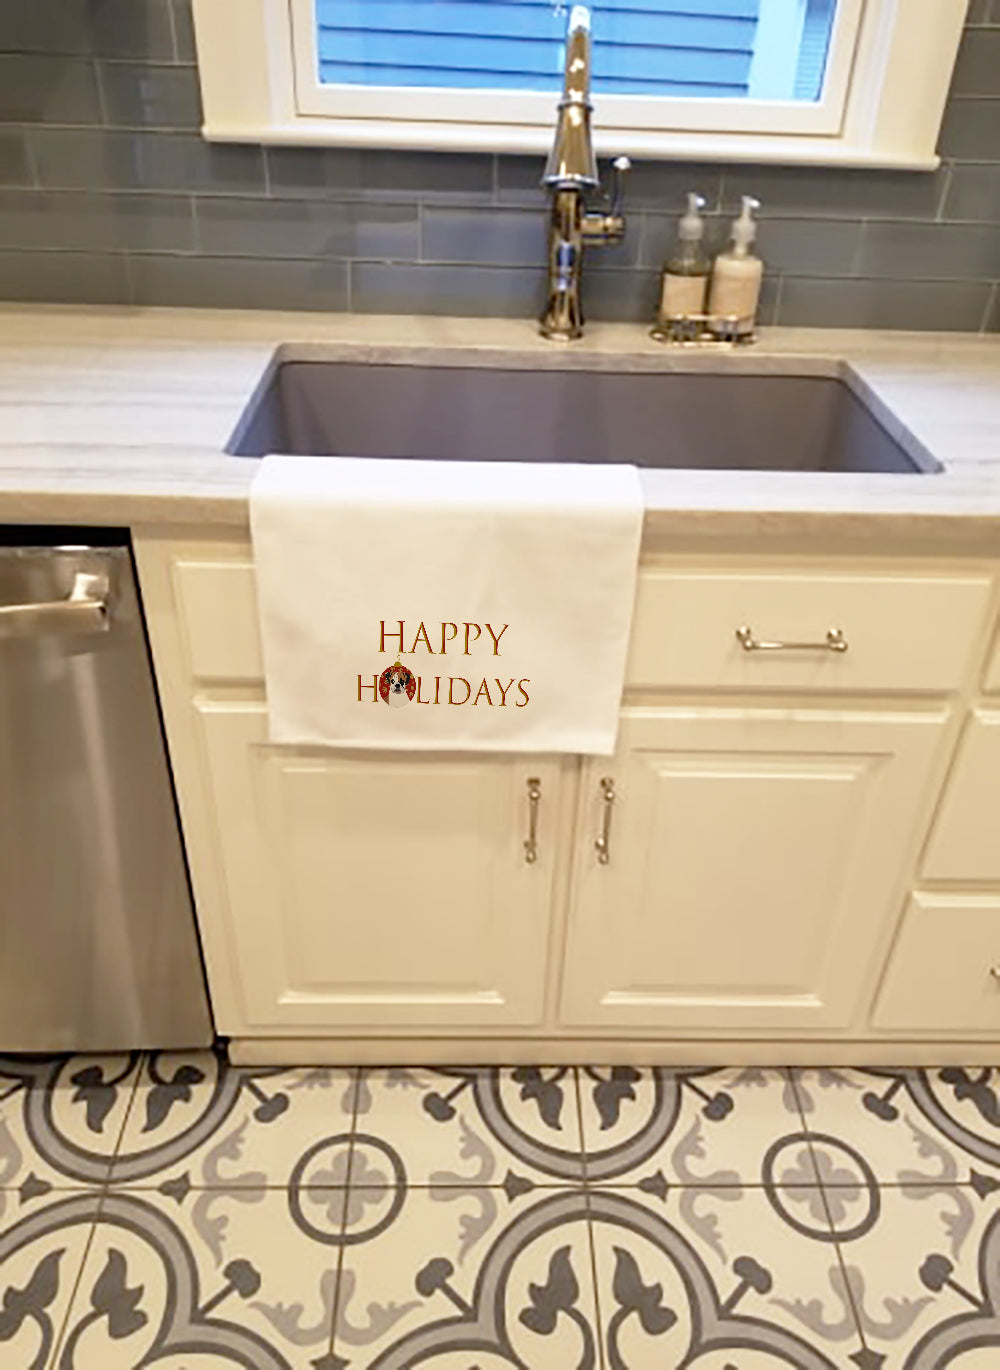 Buy this English Bulldog Tricolor #2 Happy Holidays White Kitchen Towel Set of 2